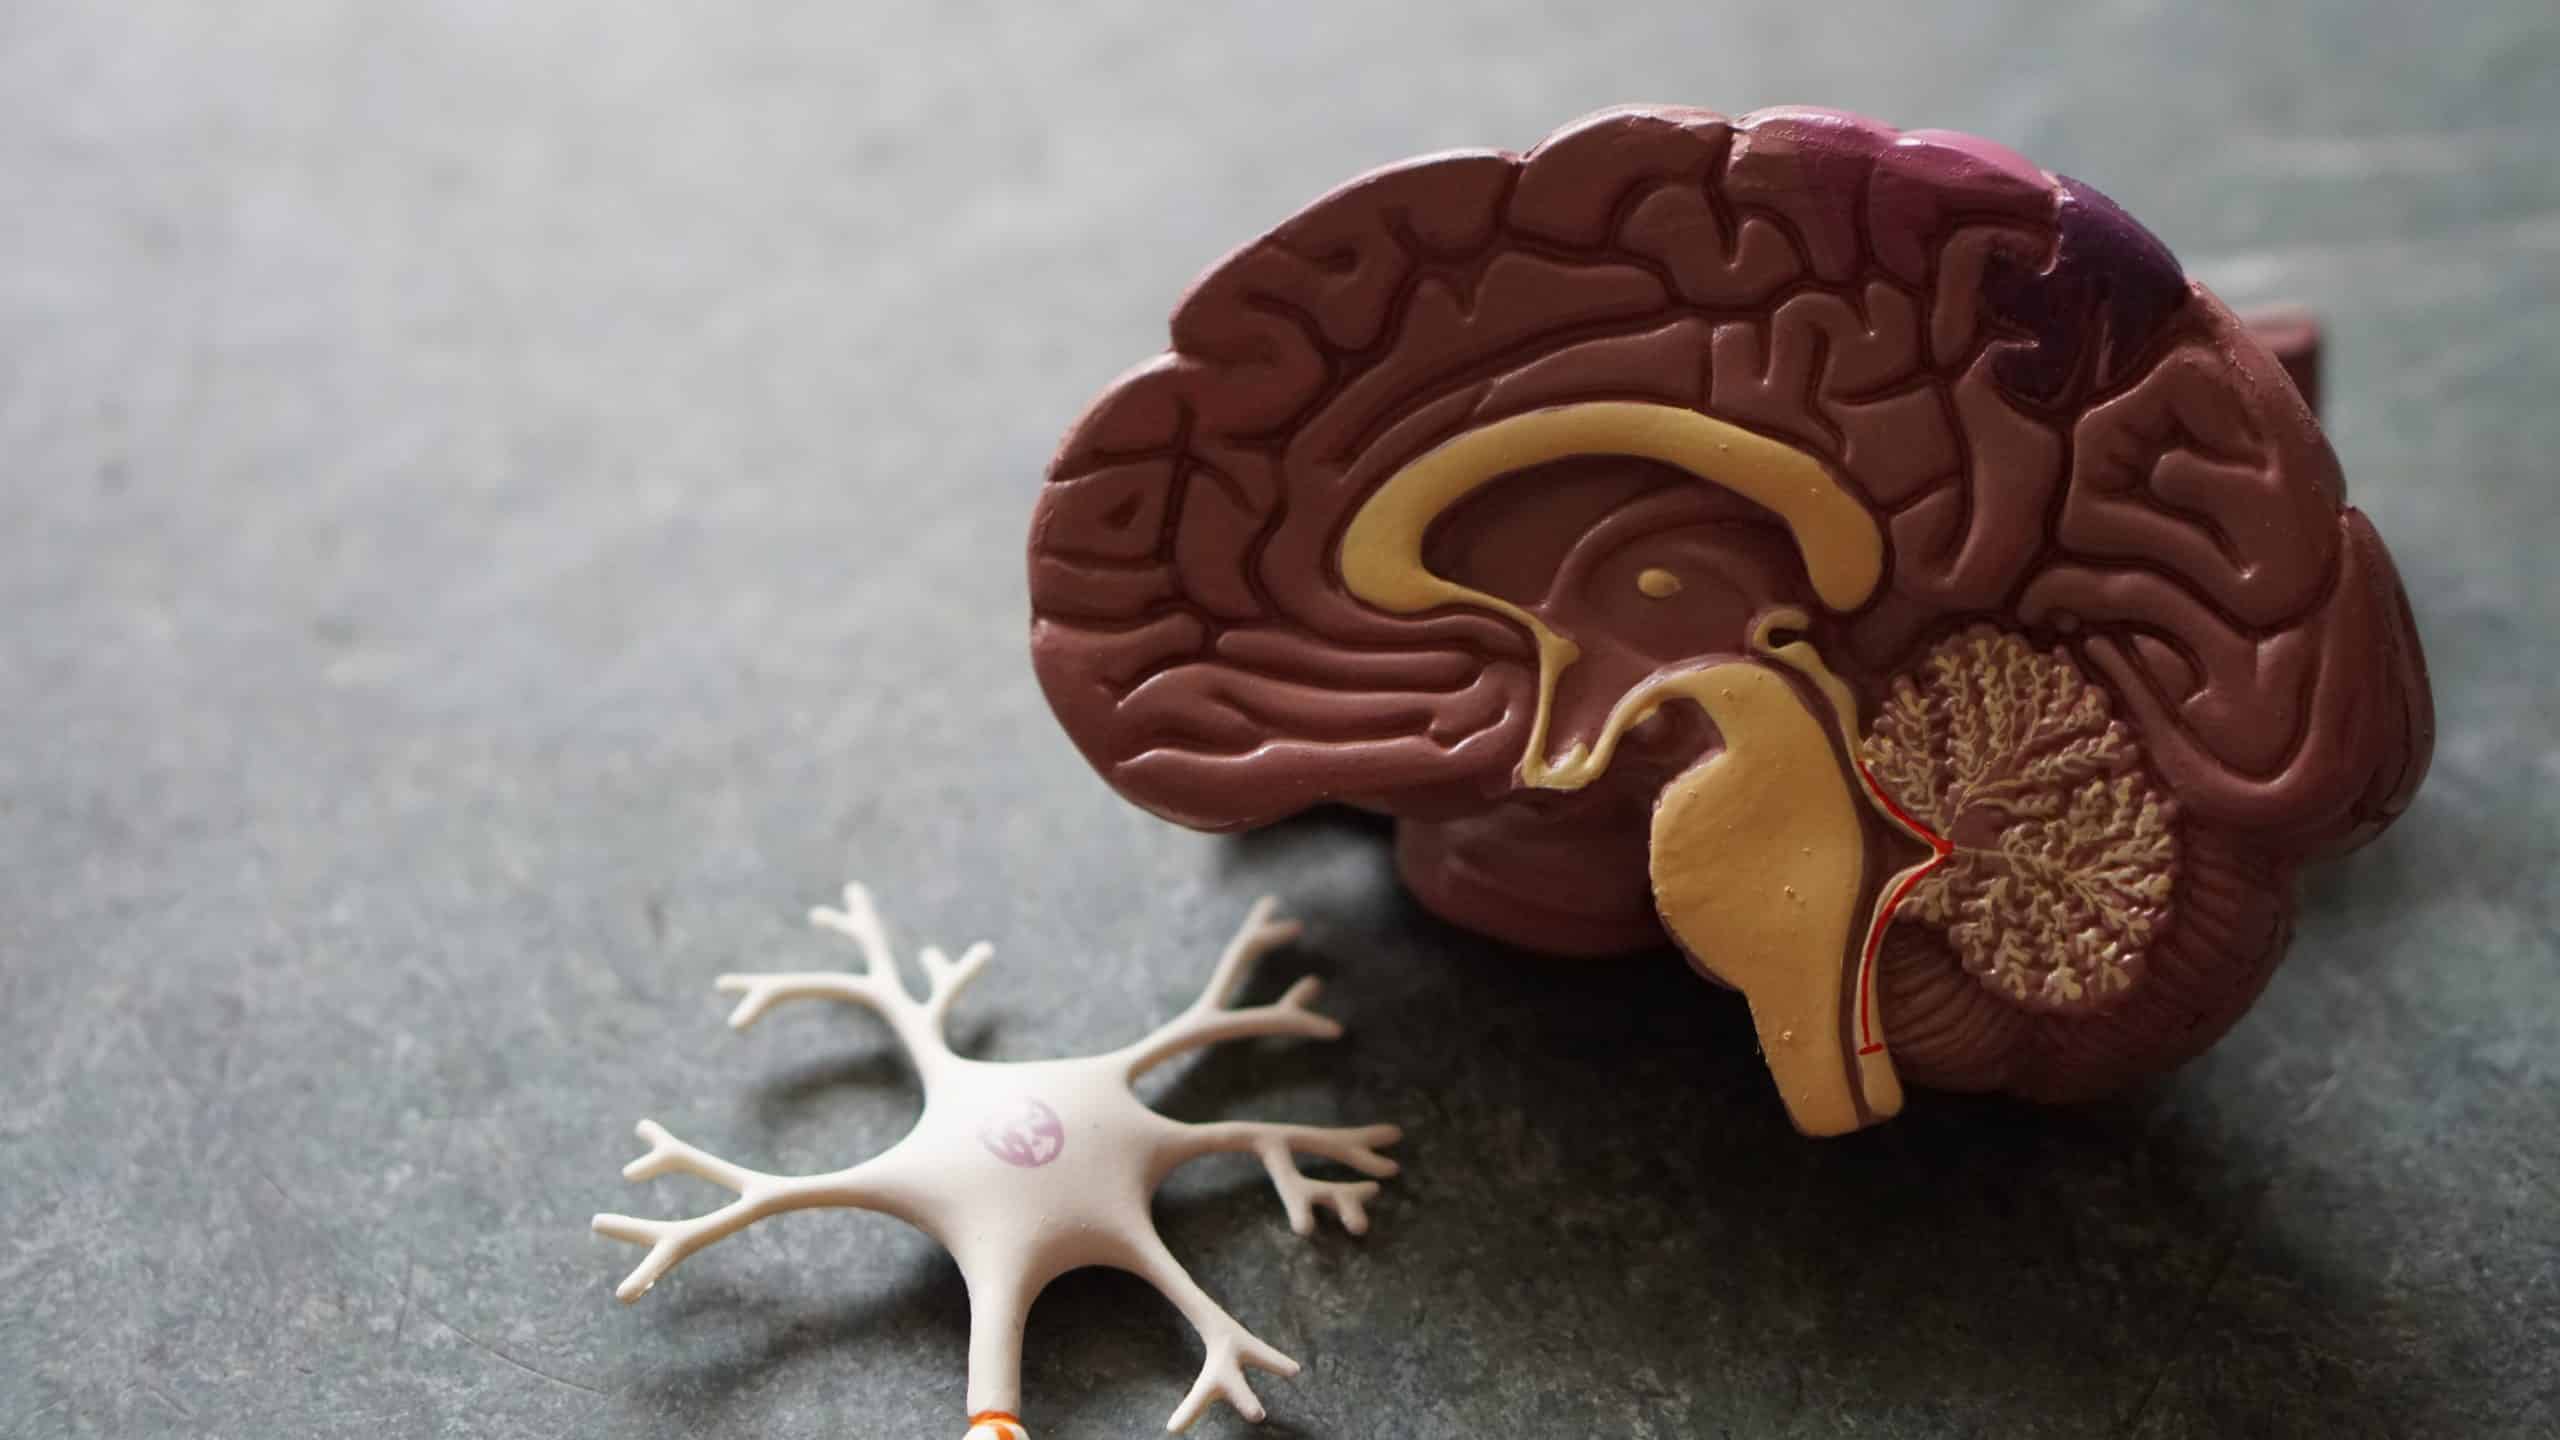 How Do Stimulants Affect The Brain?